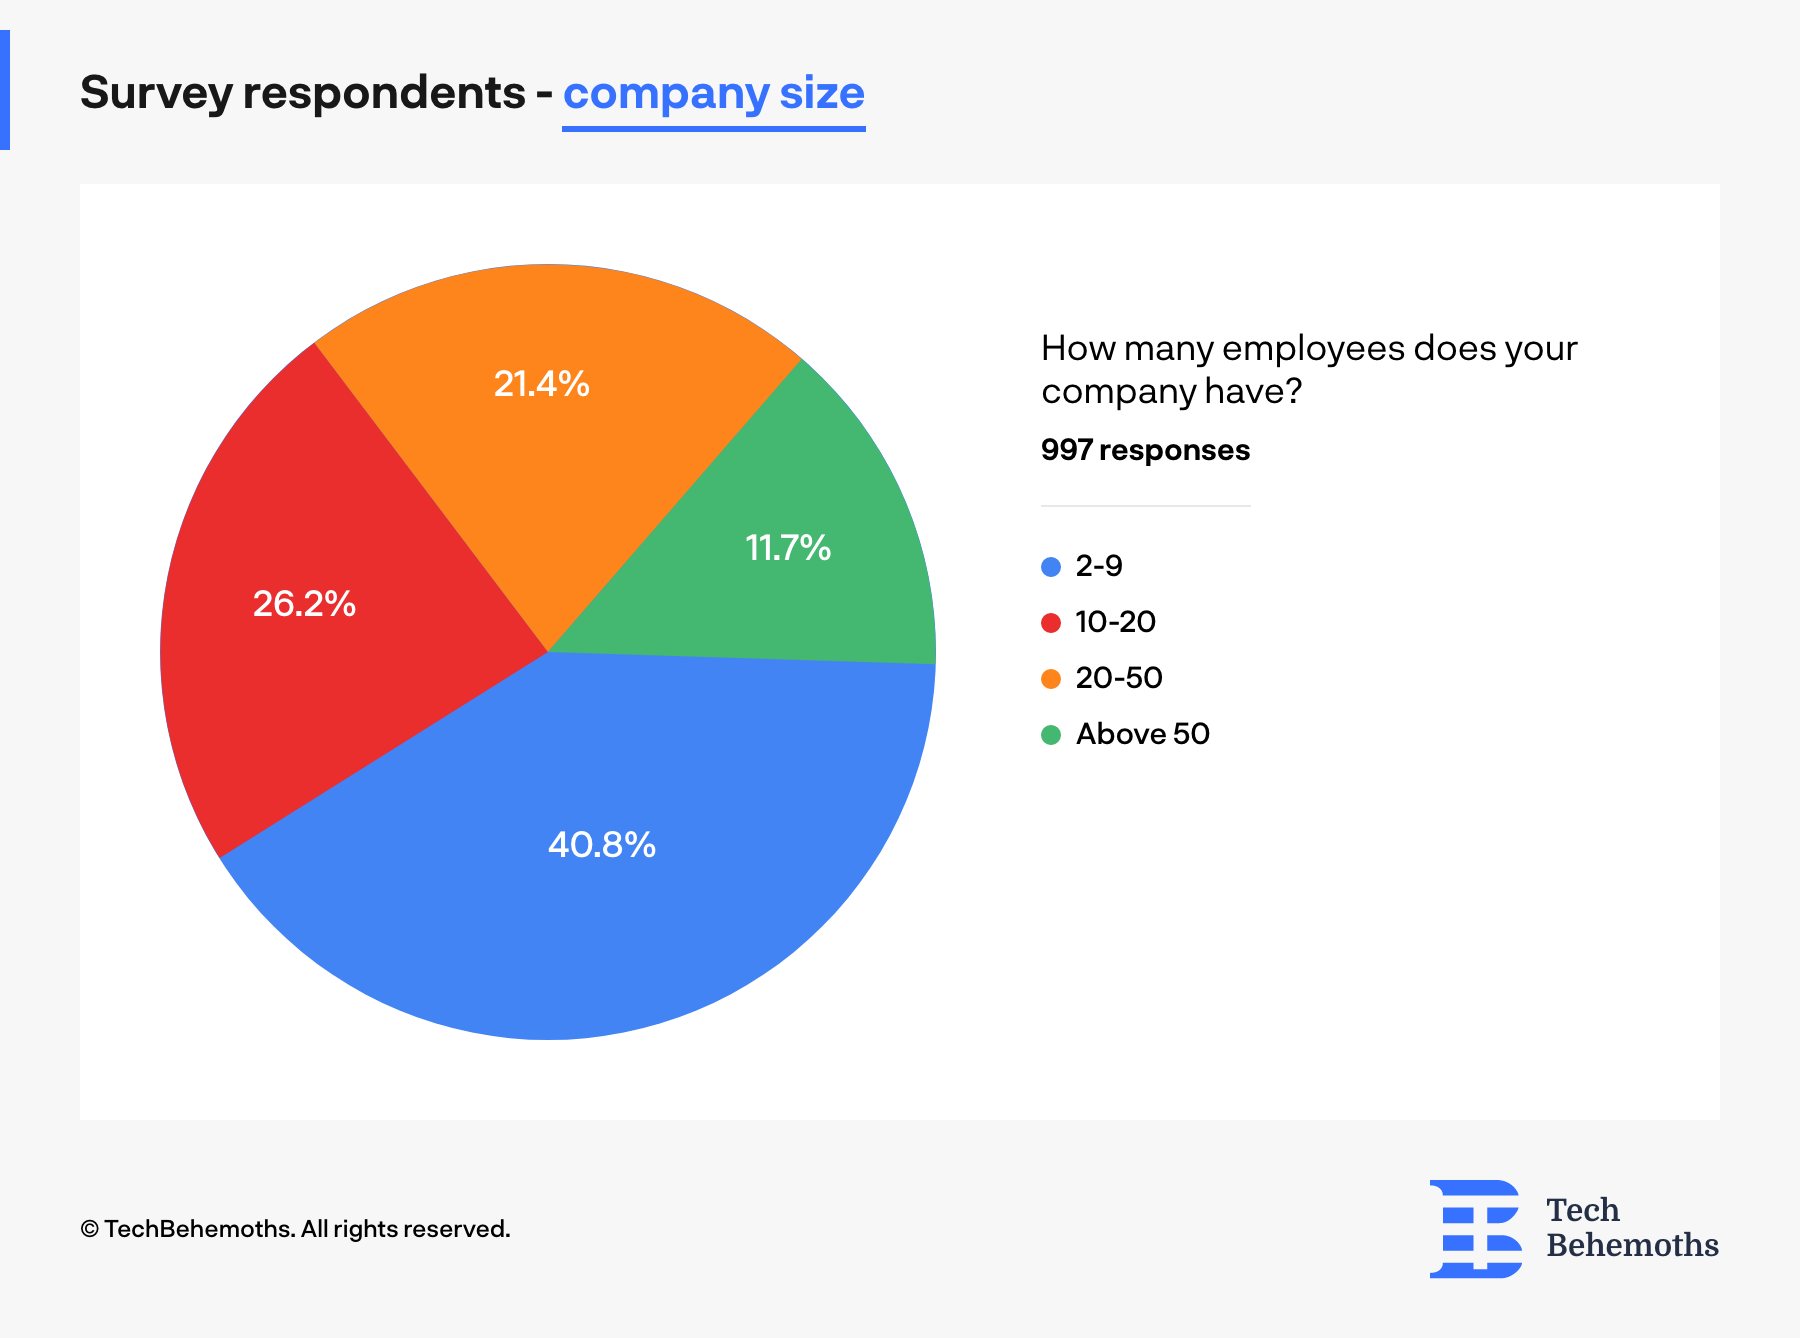 company size of surveyed companies